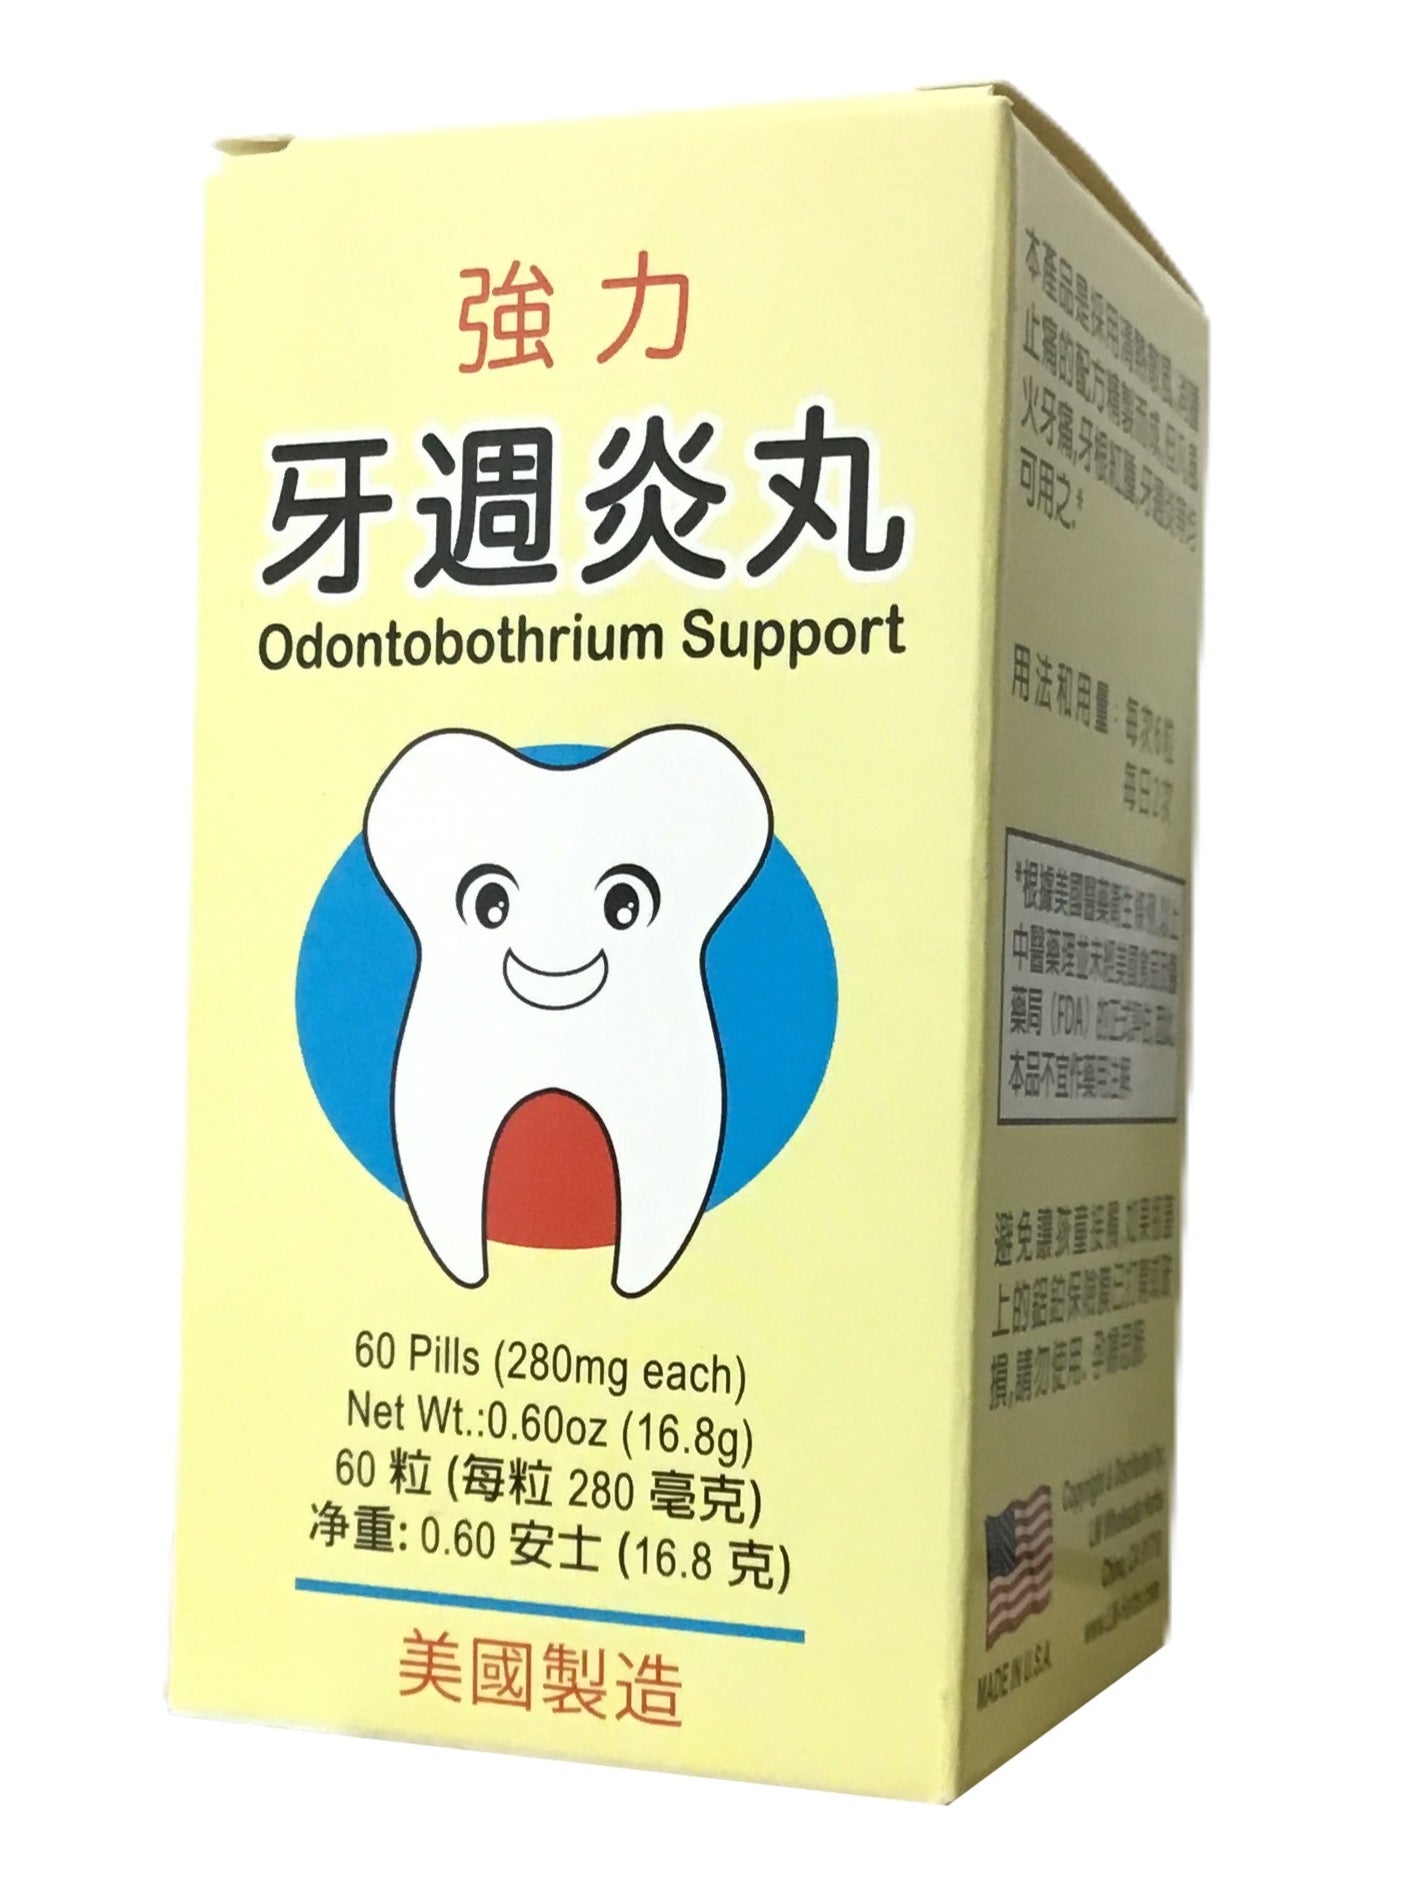 Odontobithrium Support 老威牌 牙週炎丸 (60 Pills)